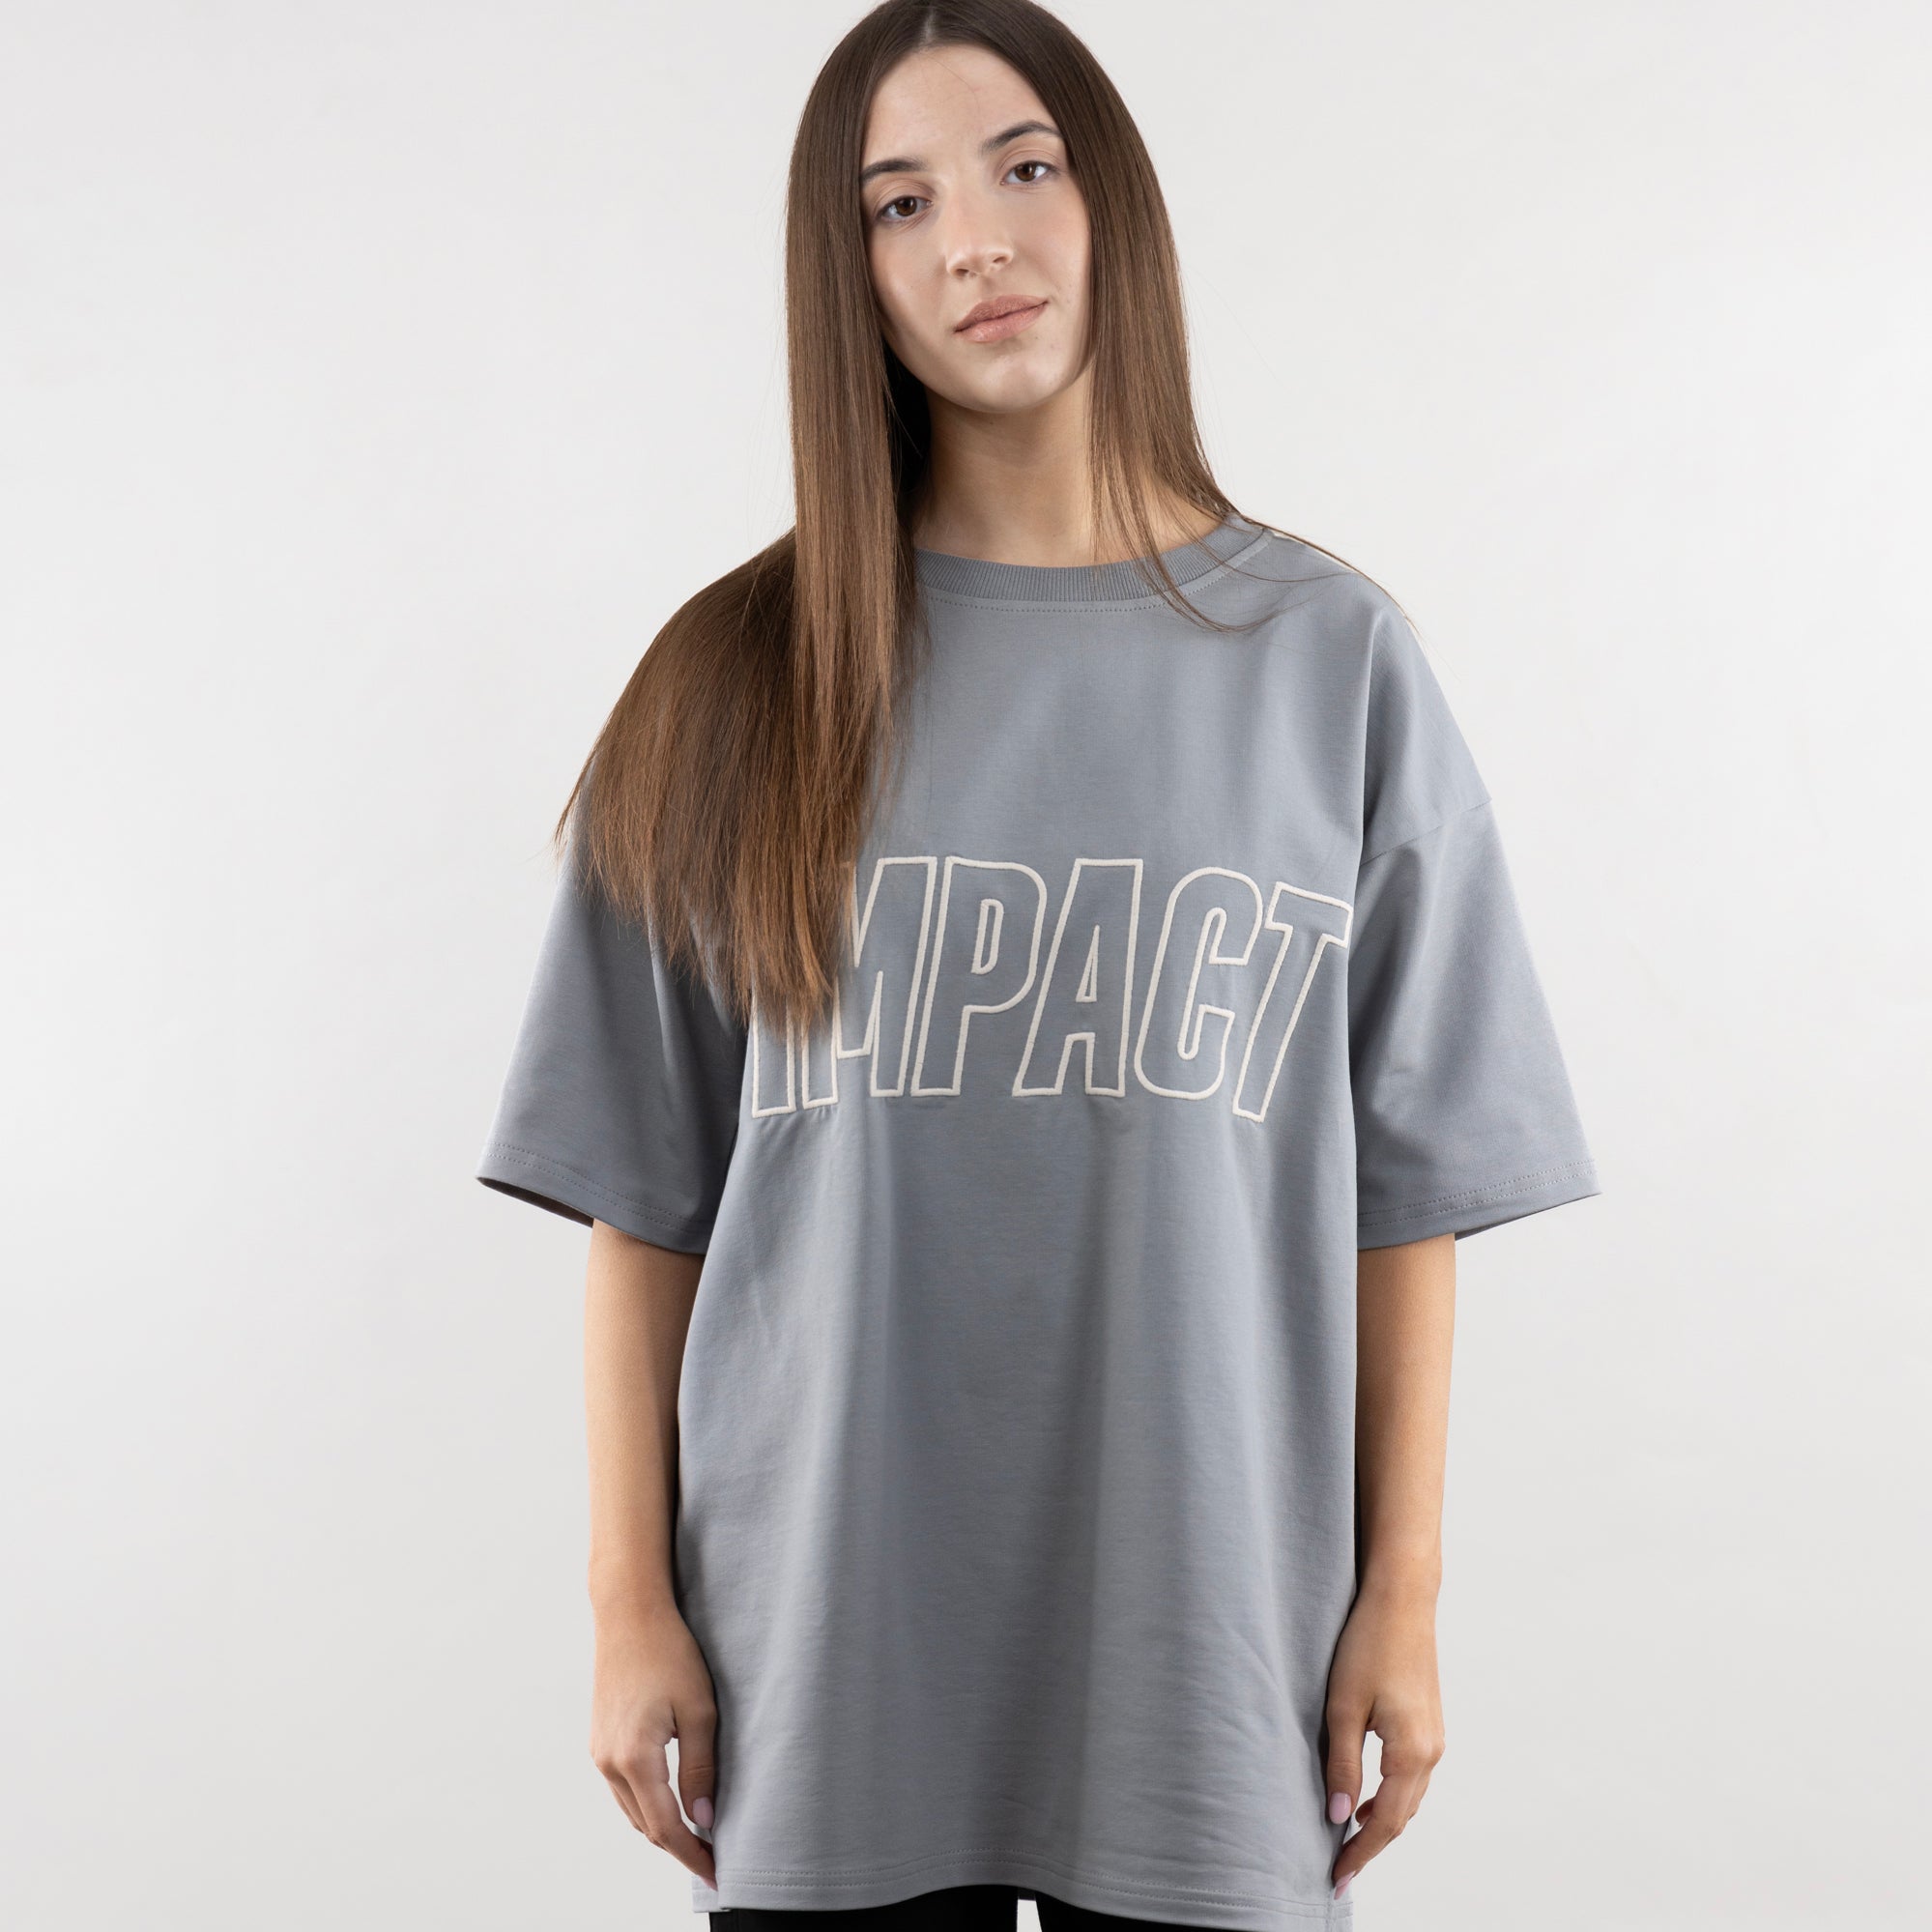 Oversize Basic T-Shirt "Impact" For Women